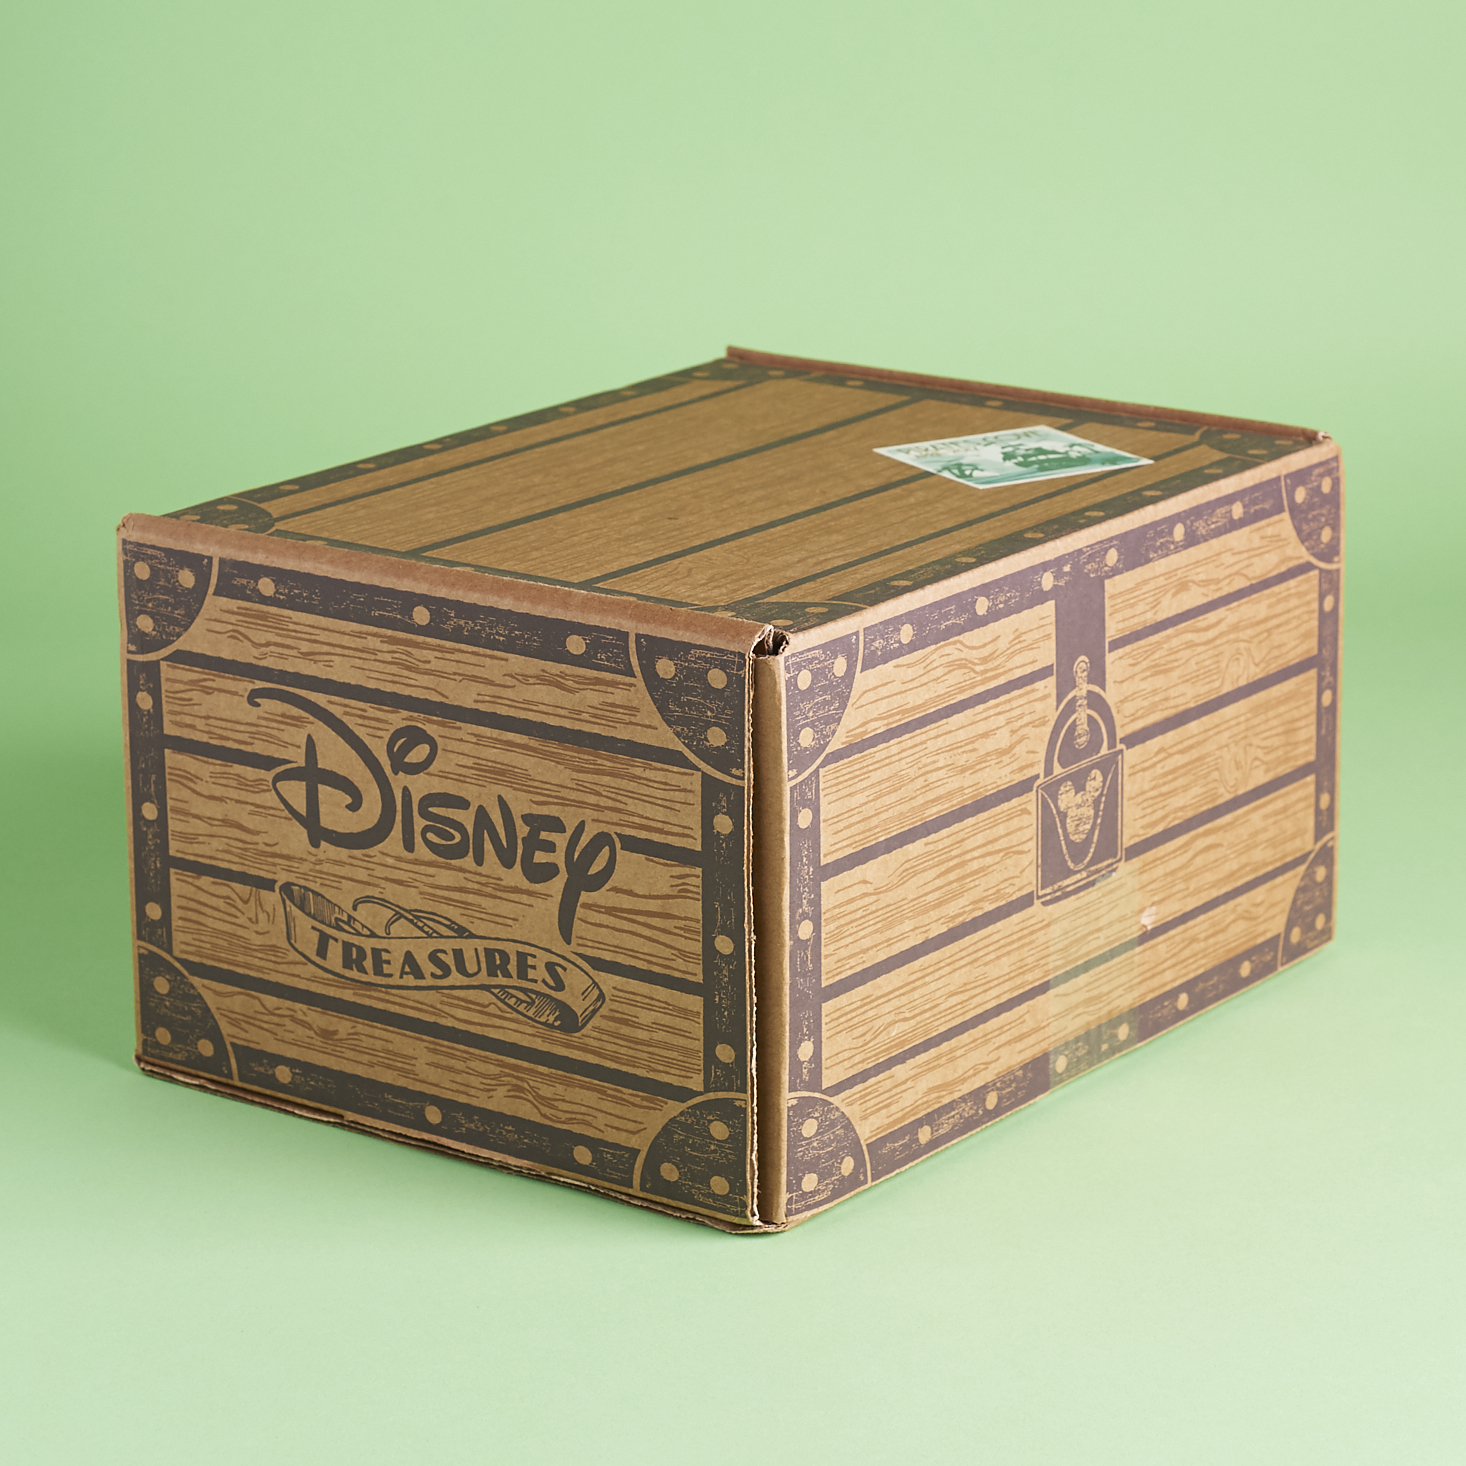 Disney Treasures Subscription Box Review – April 2017